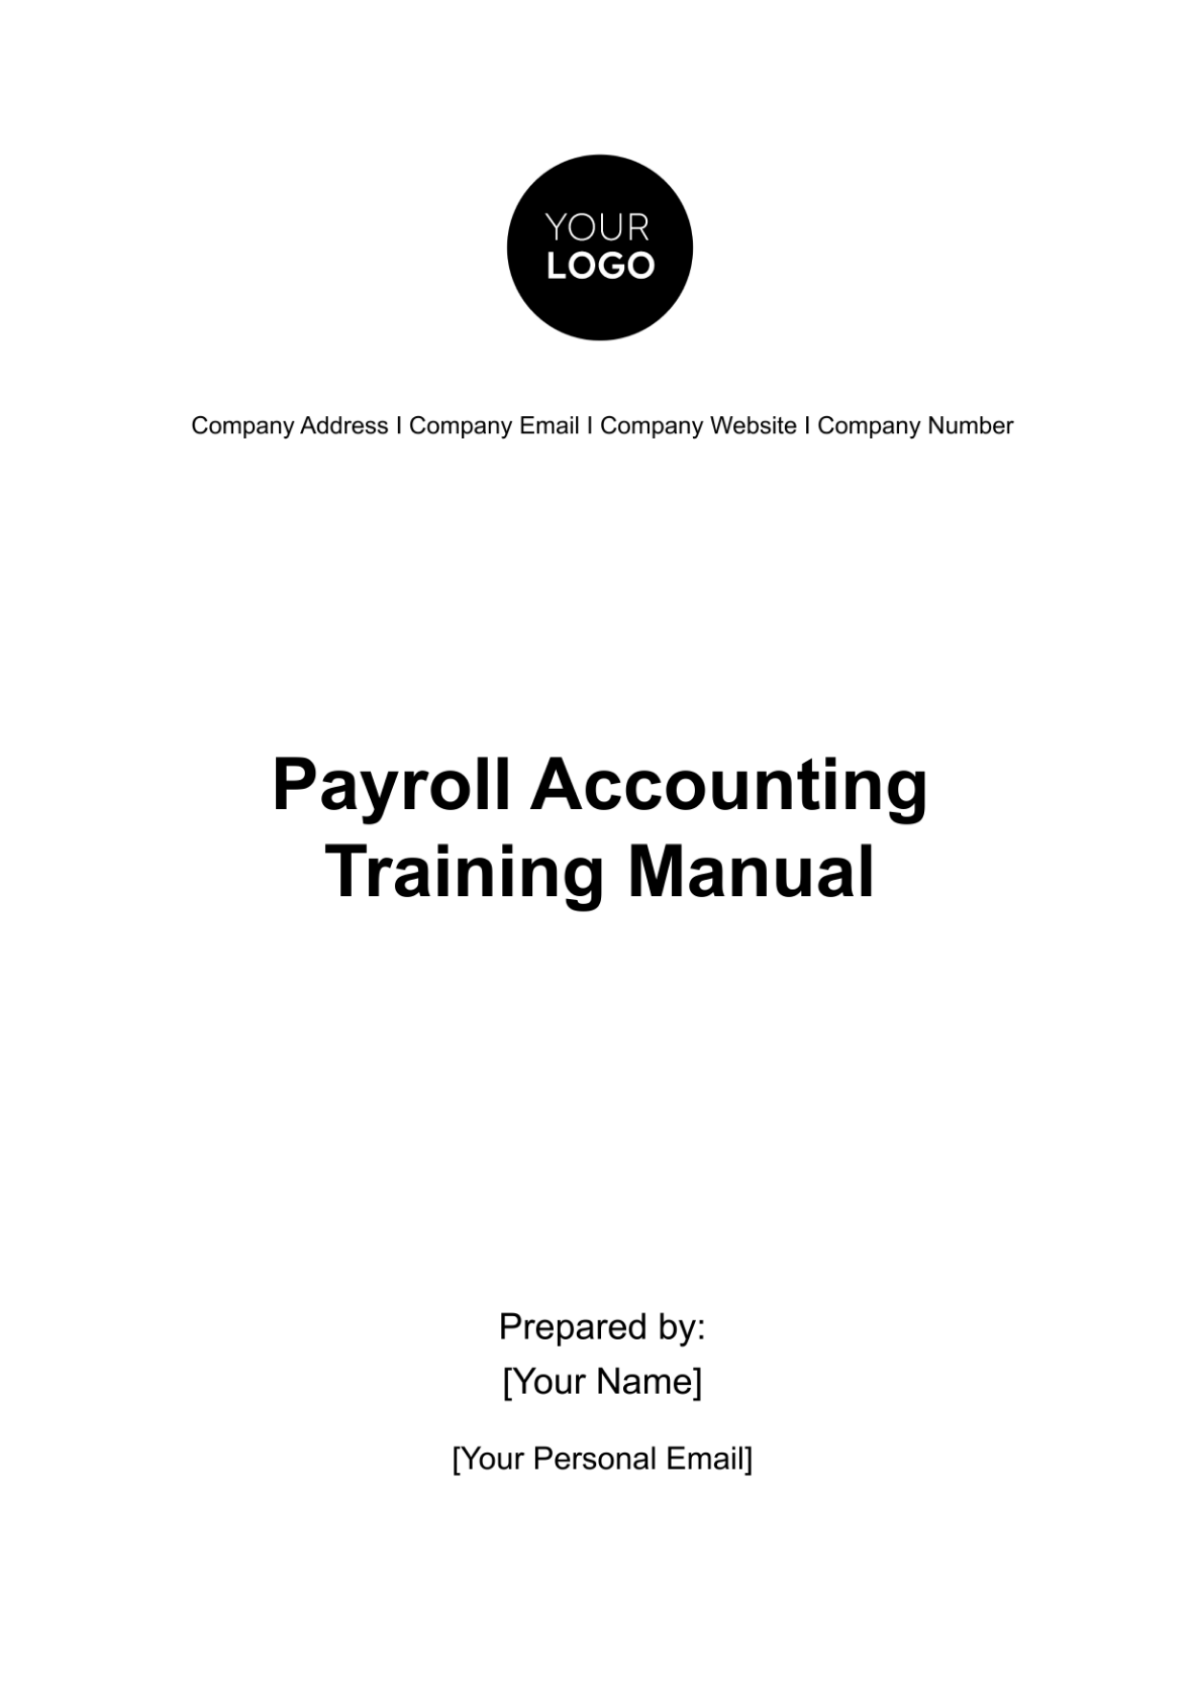 Payroll Accounting Training Manual Template